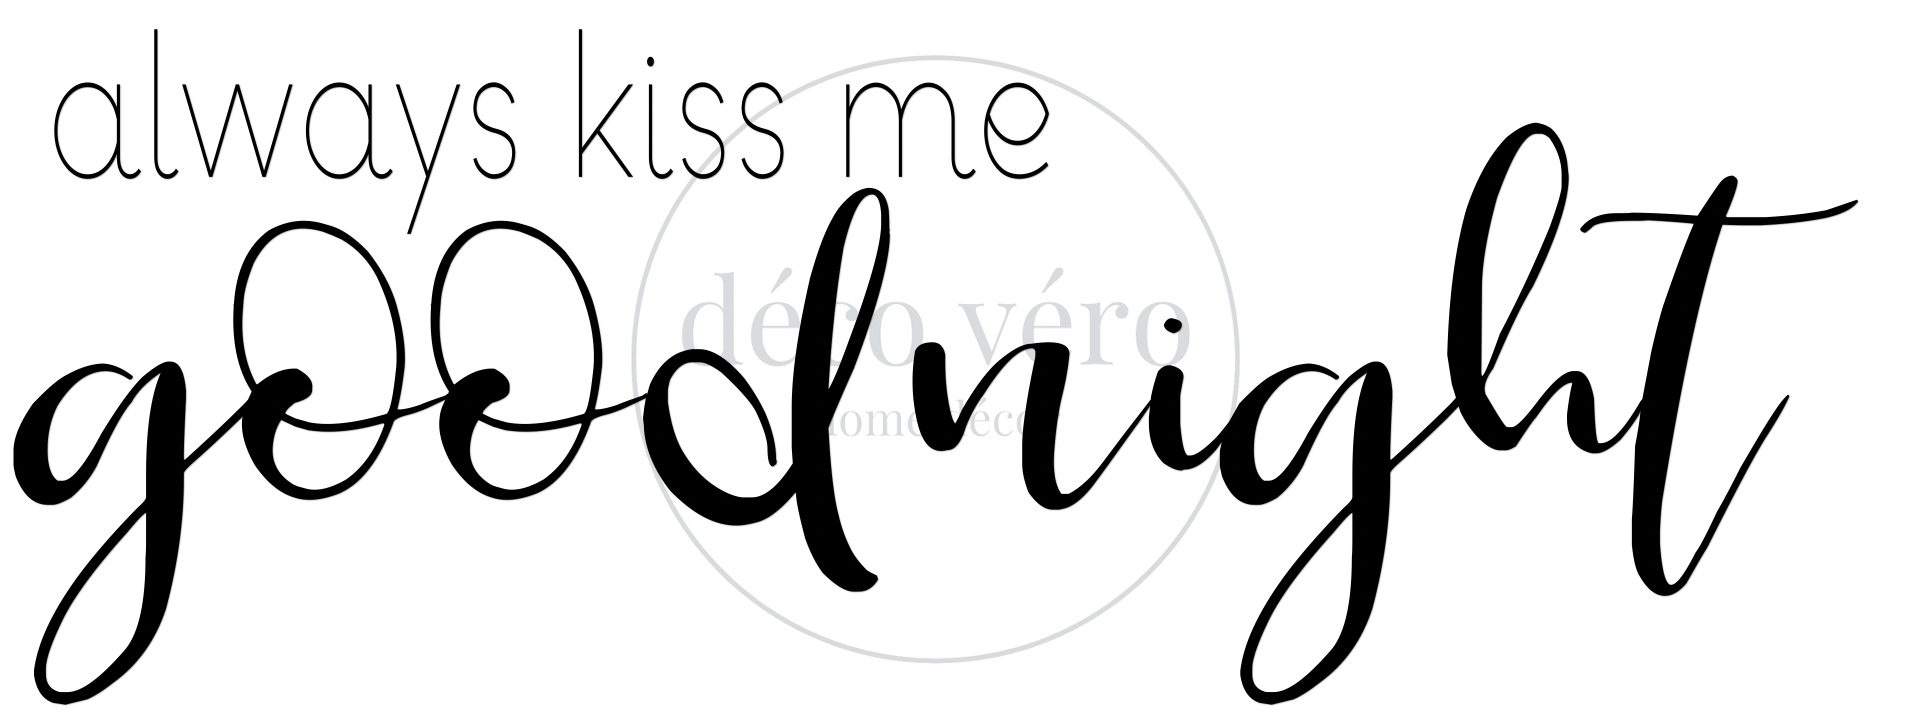 Always Kiss Me Goodnight - 18"x48"